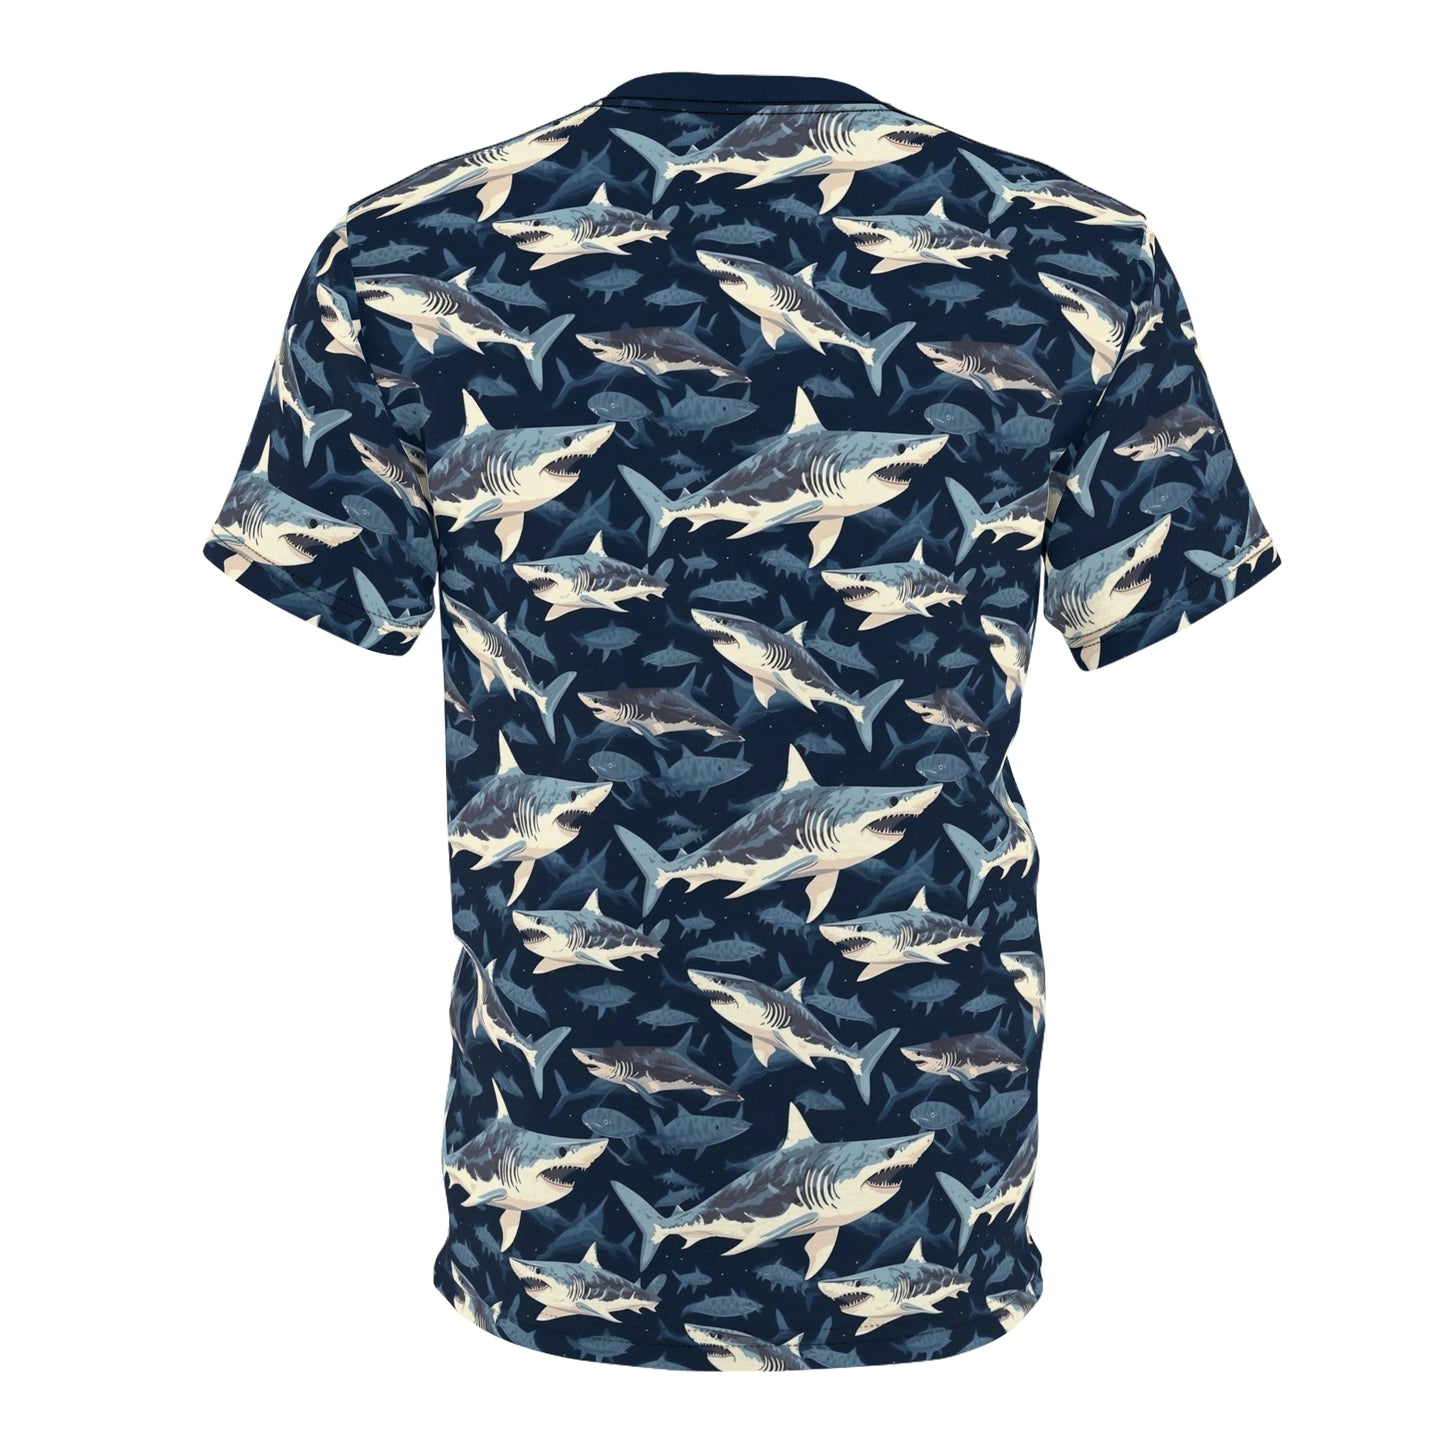 Great White Shark Men Tshirt, Blue Navy Ocean Sea Fish Designer Graphic Aesthetic Crewneck Unisex Tee Top Short Sleeve Shirt Starcove Fashion